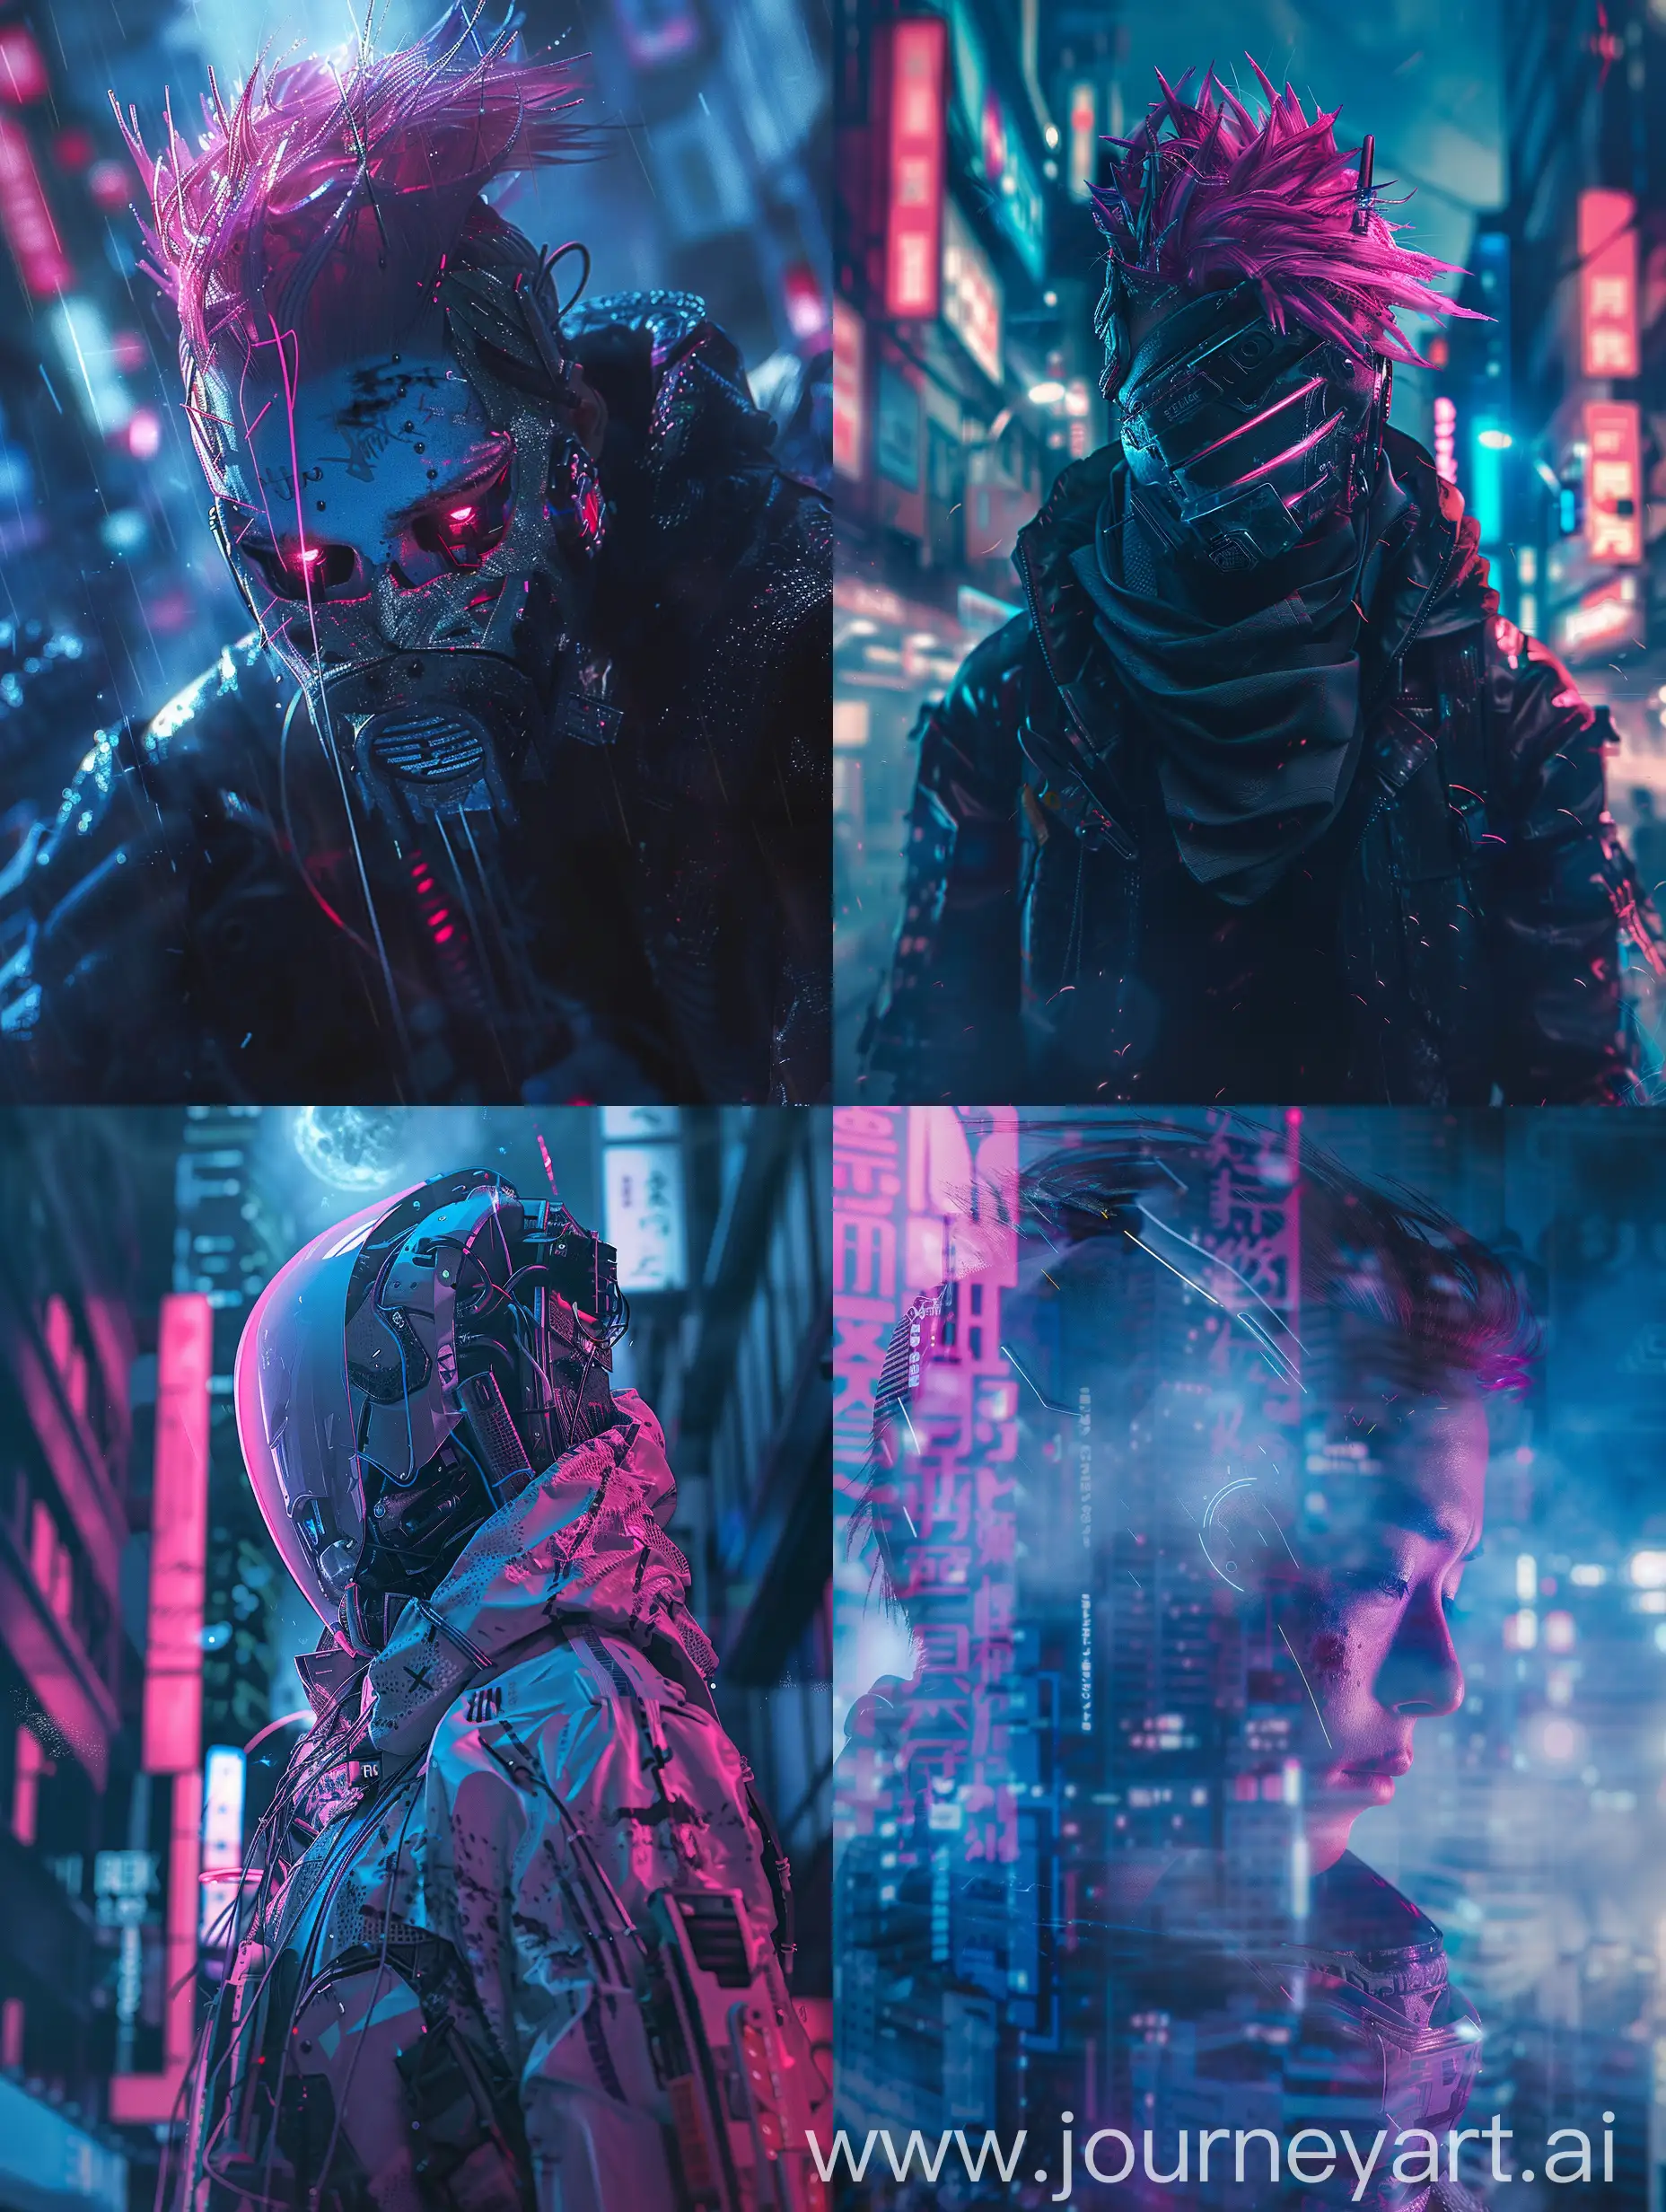 Arrancar ras Bleach, darkness, potrait, realistic, high detailed, cyberpunk concept, with subtle pink and blue gradients, futuristic, Moonlight enveloping attire tech-punk mech-punk cityscape.